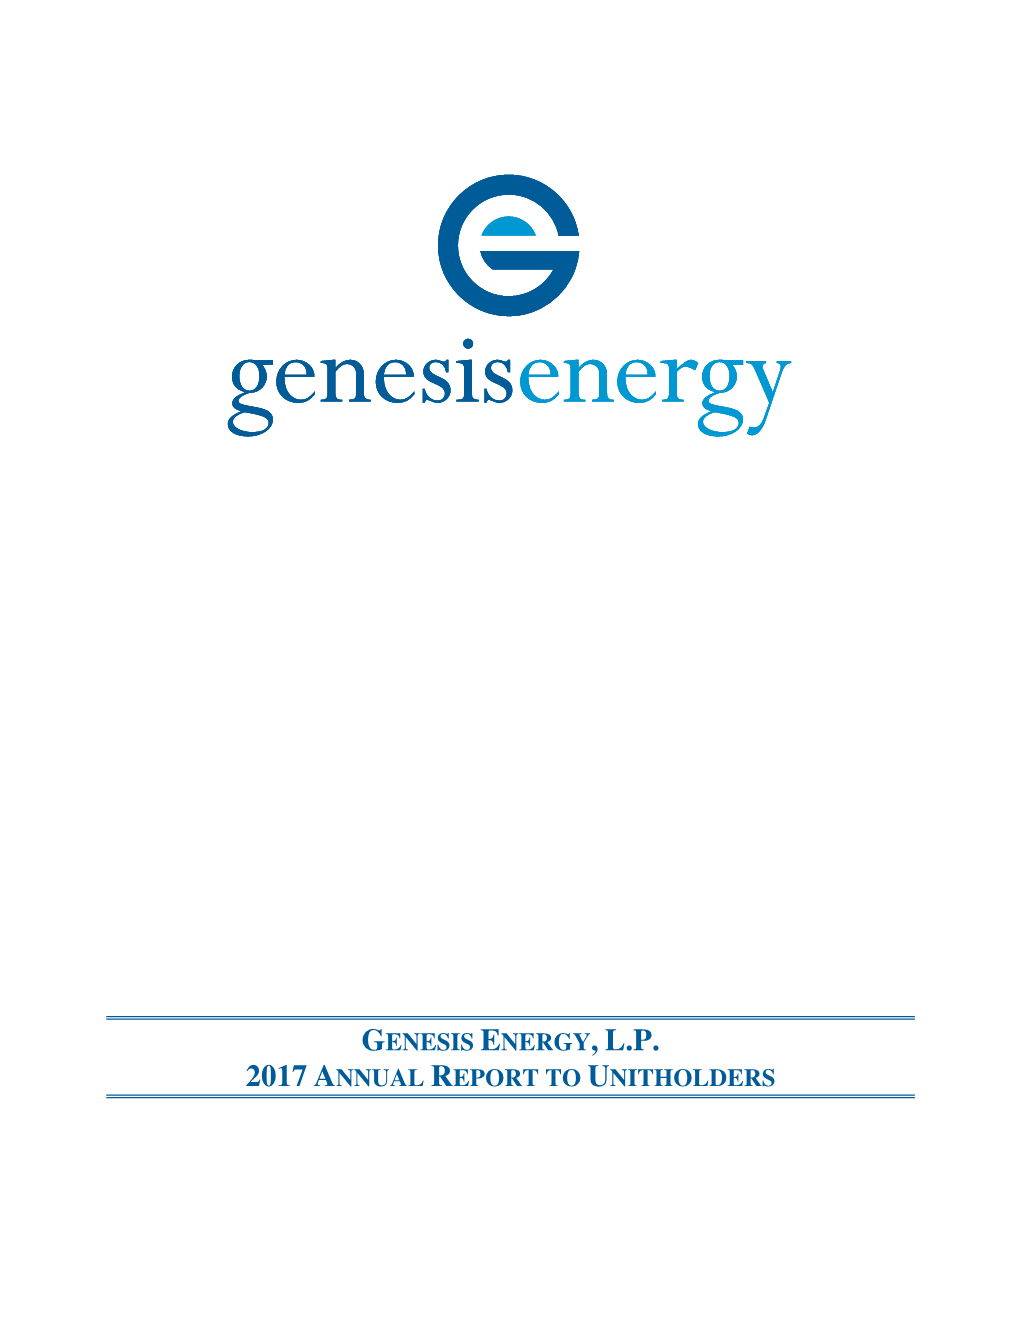 Genesis Energy, L.P. 2017 Annual Report to Unitholders